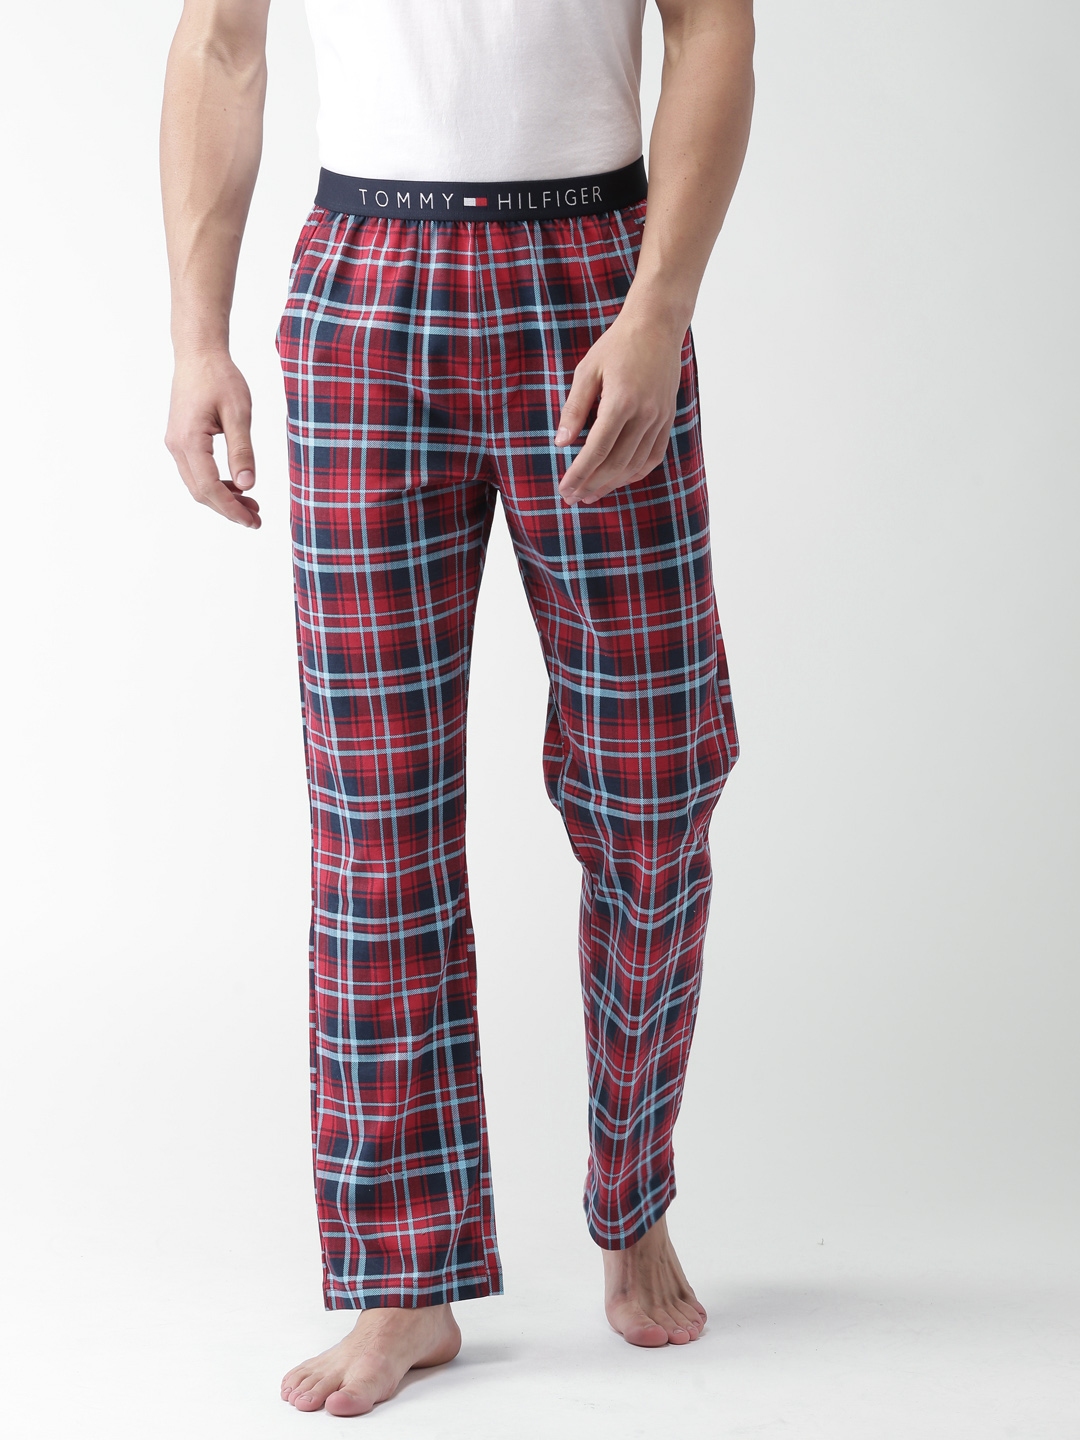 Tommy Hilfiger Womens RelaxedFit Pajama Pants  Macys